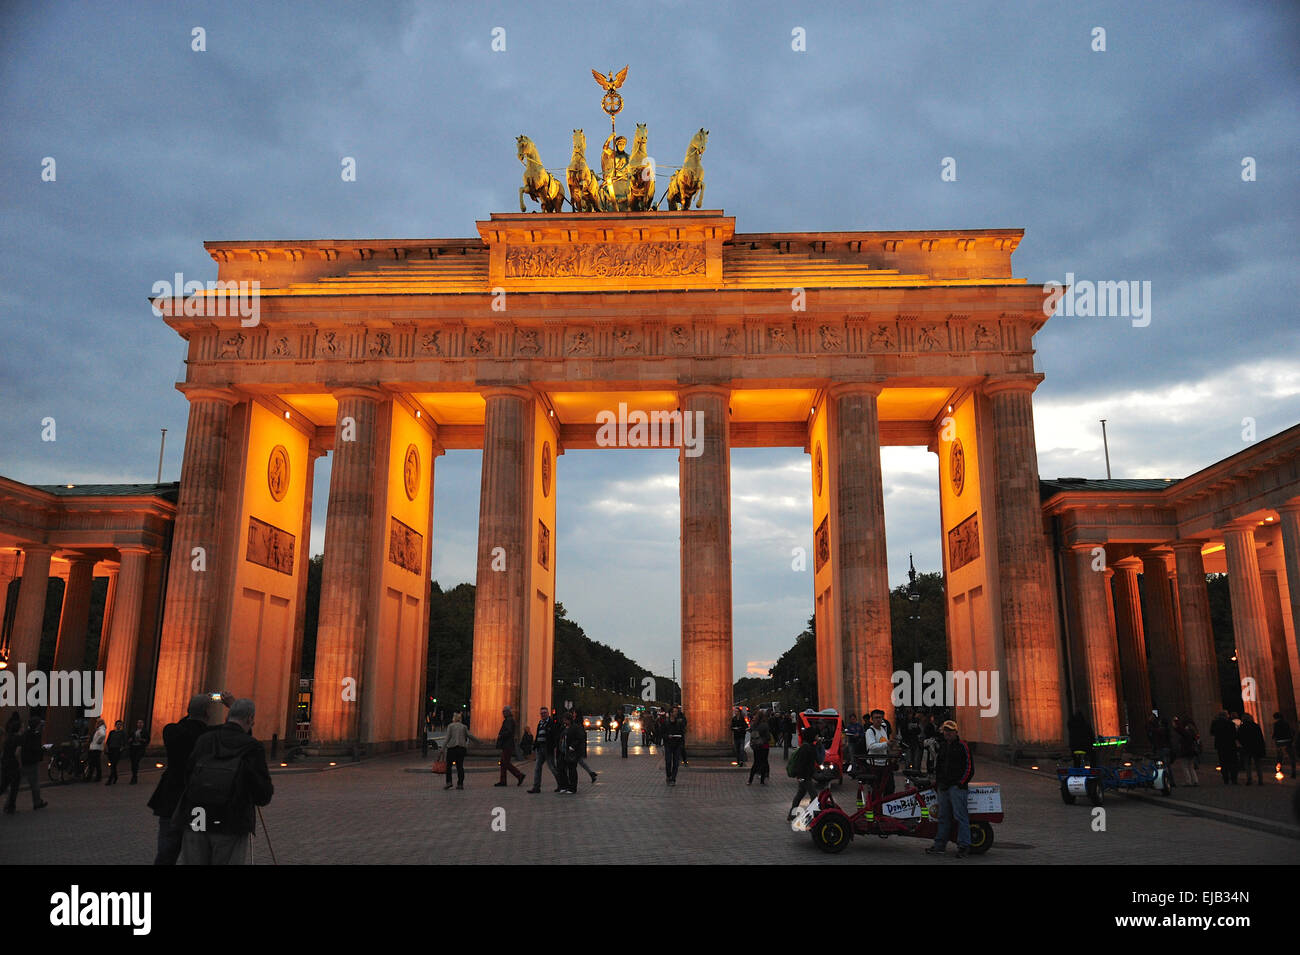 La porte de Brandebourg, Berlin, Allemagne Banque D'Images